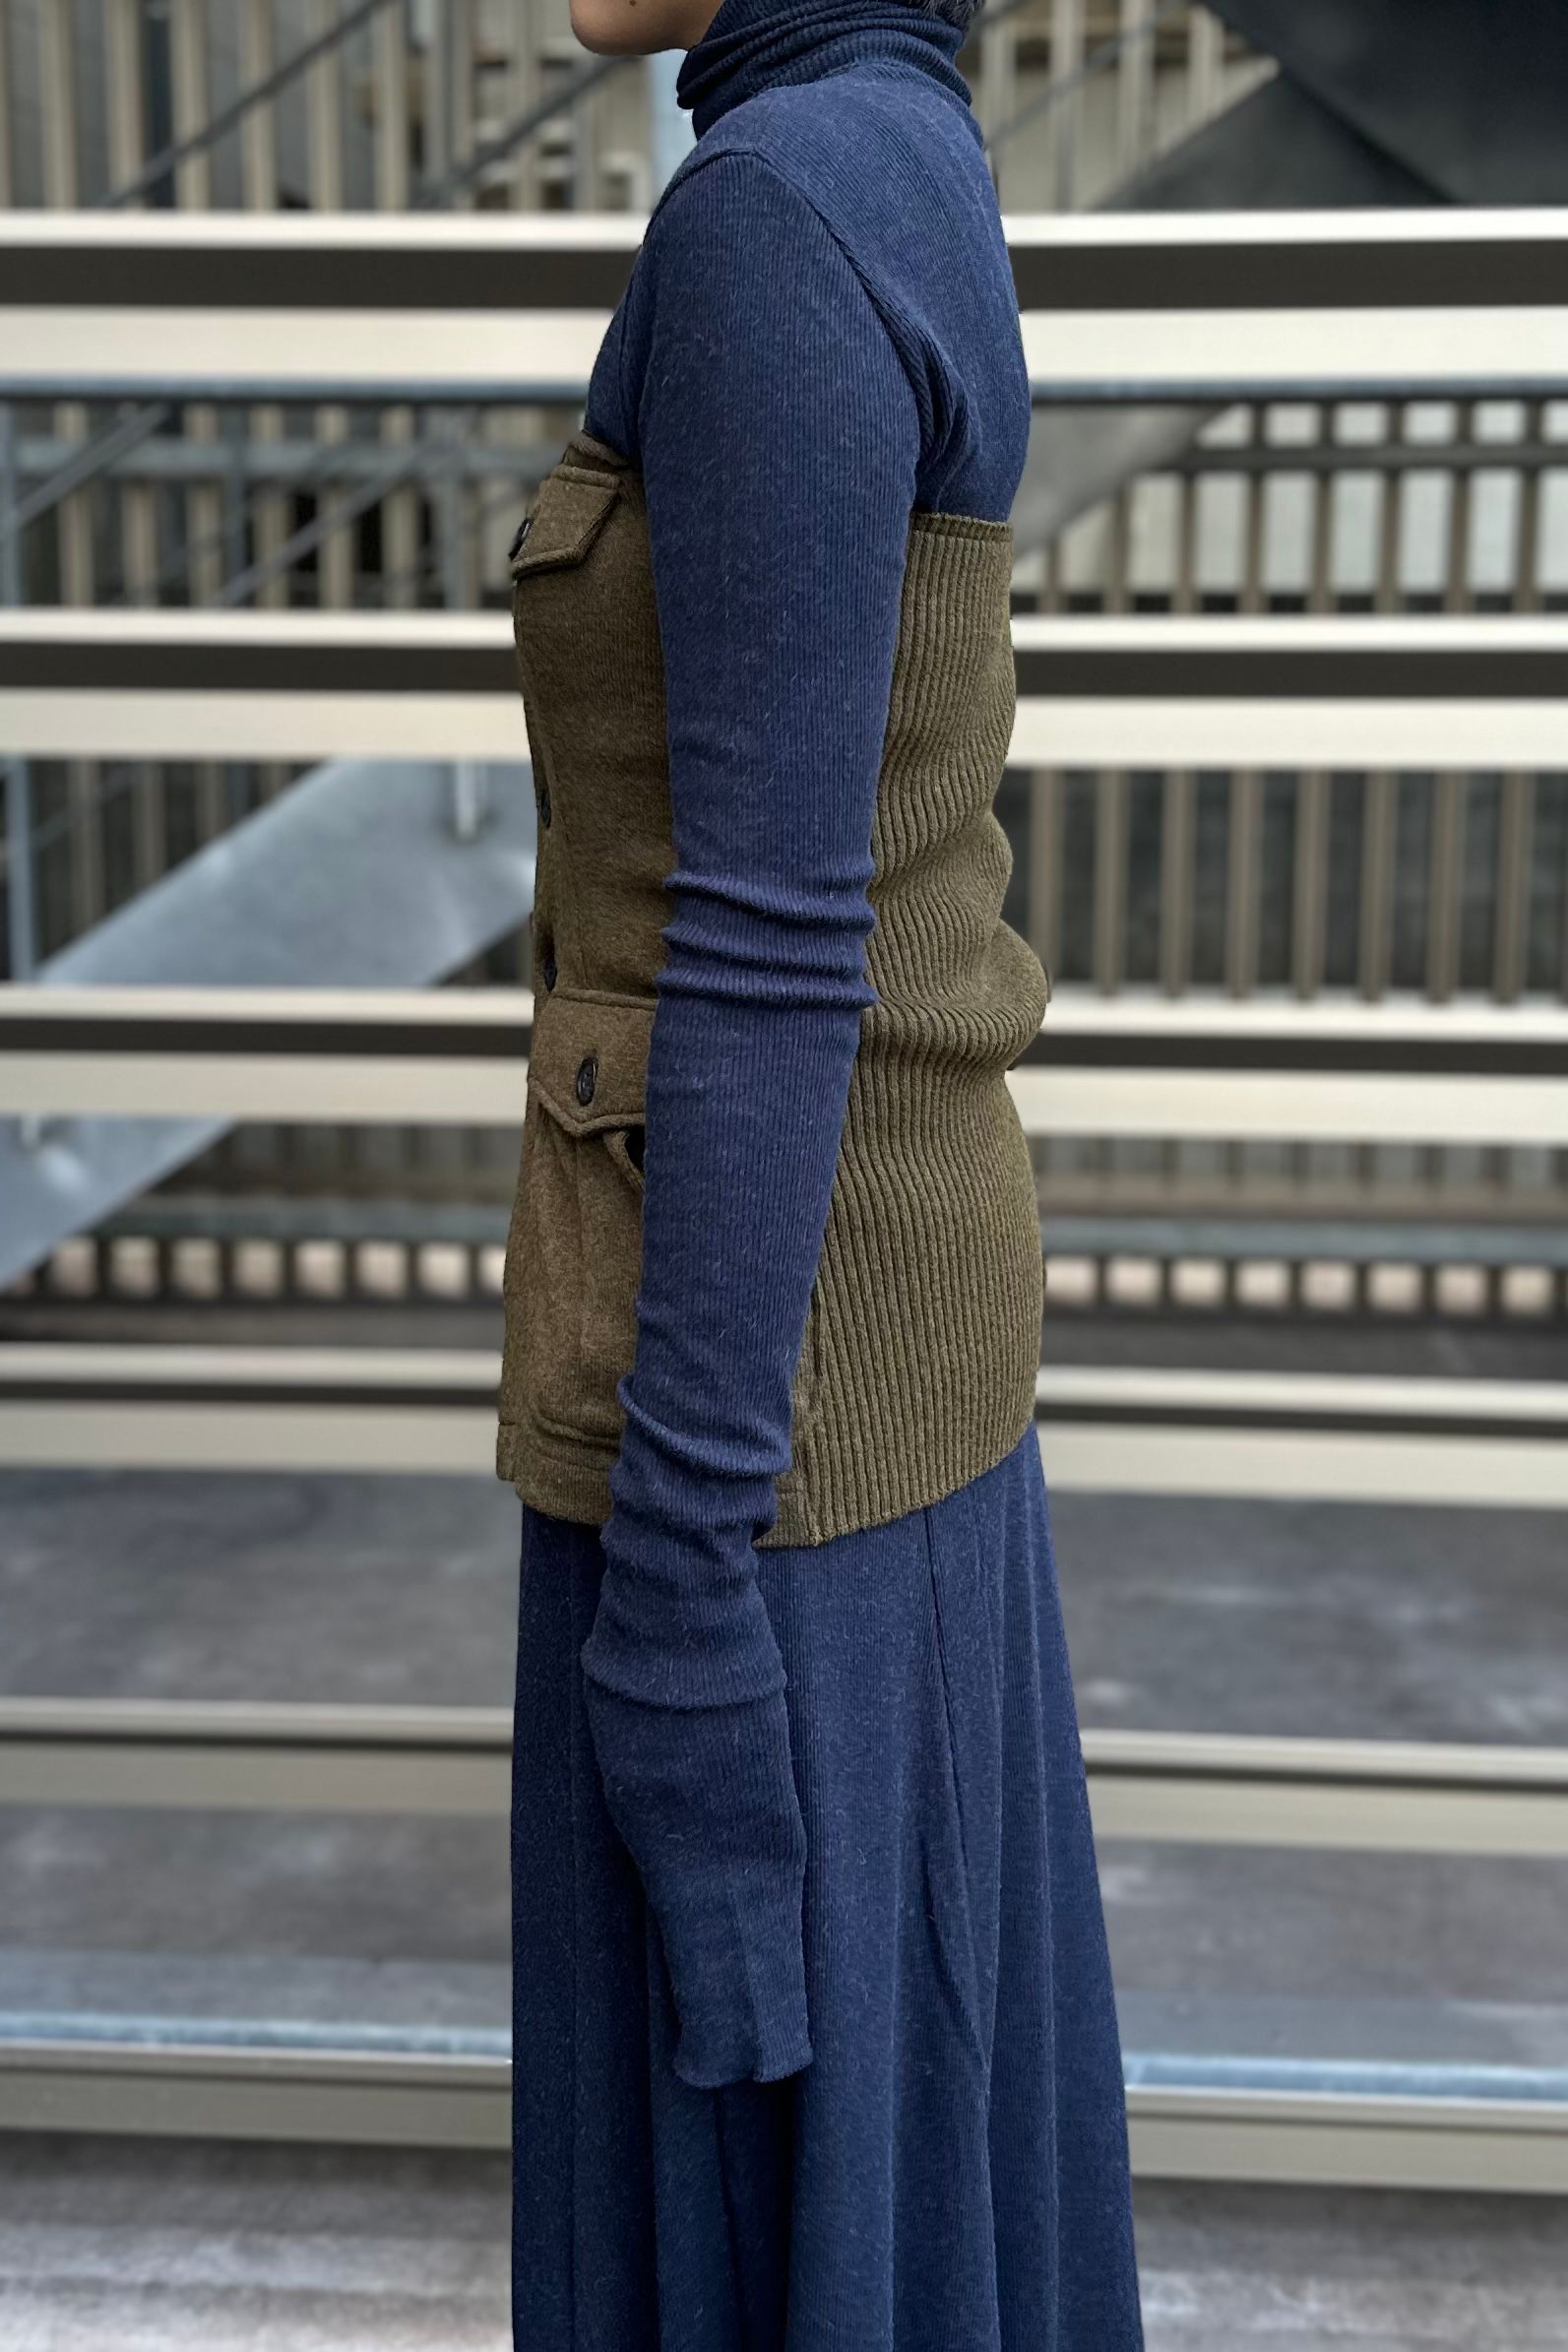 INSCRIRE - Military Wool Tube Top -khaki- 23aw women | asterisk